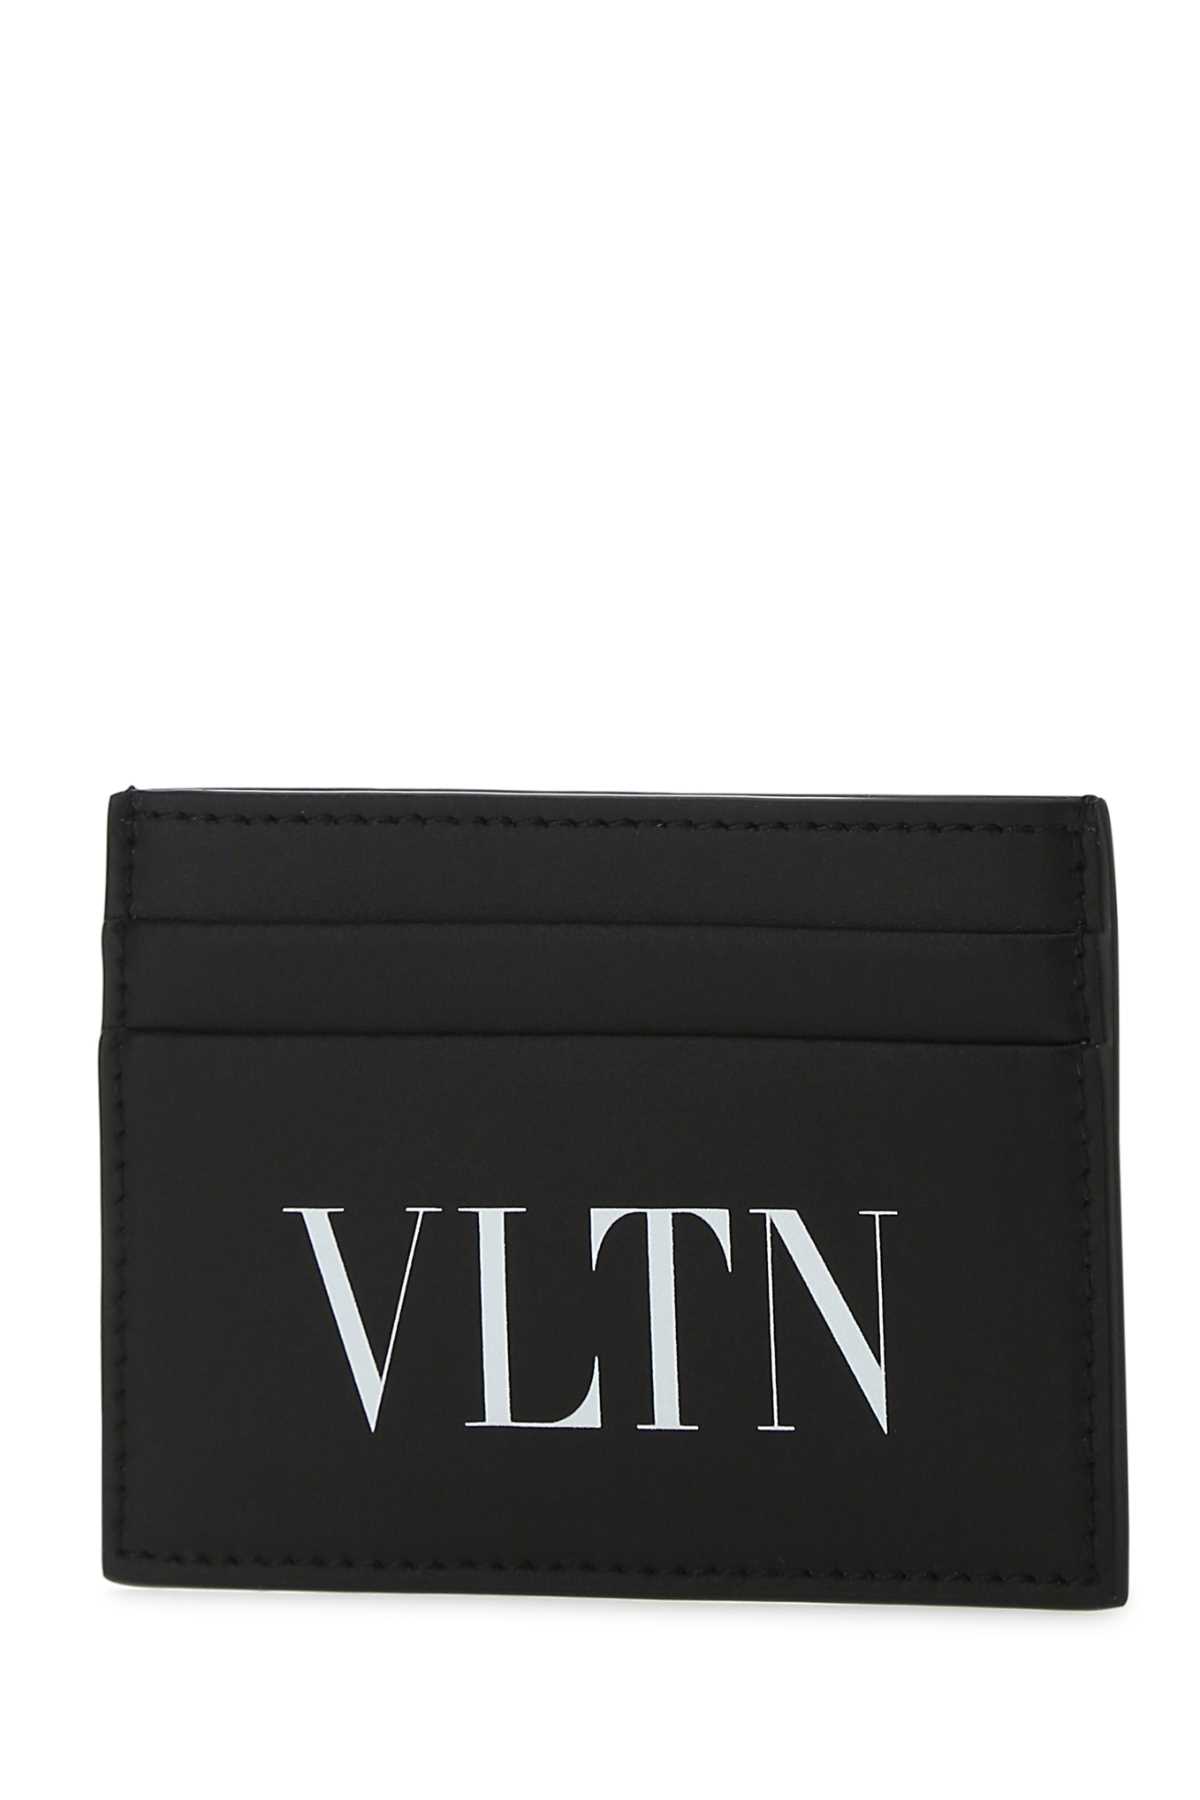 Valentino Garavani Black Leather Card Holder In Nerobianco